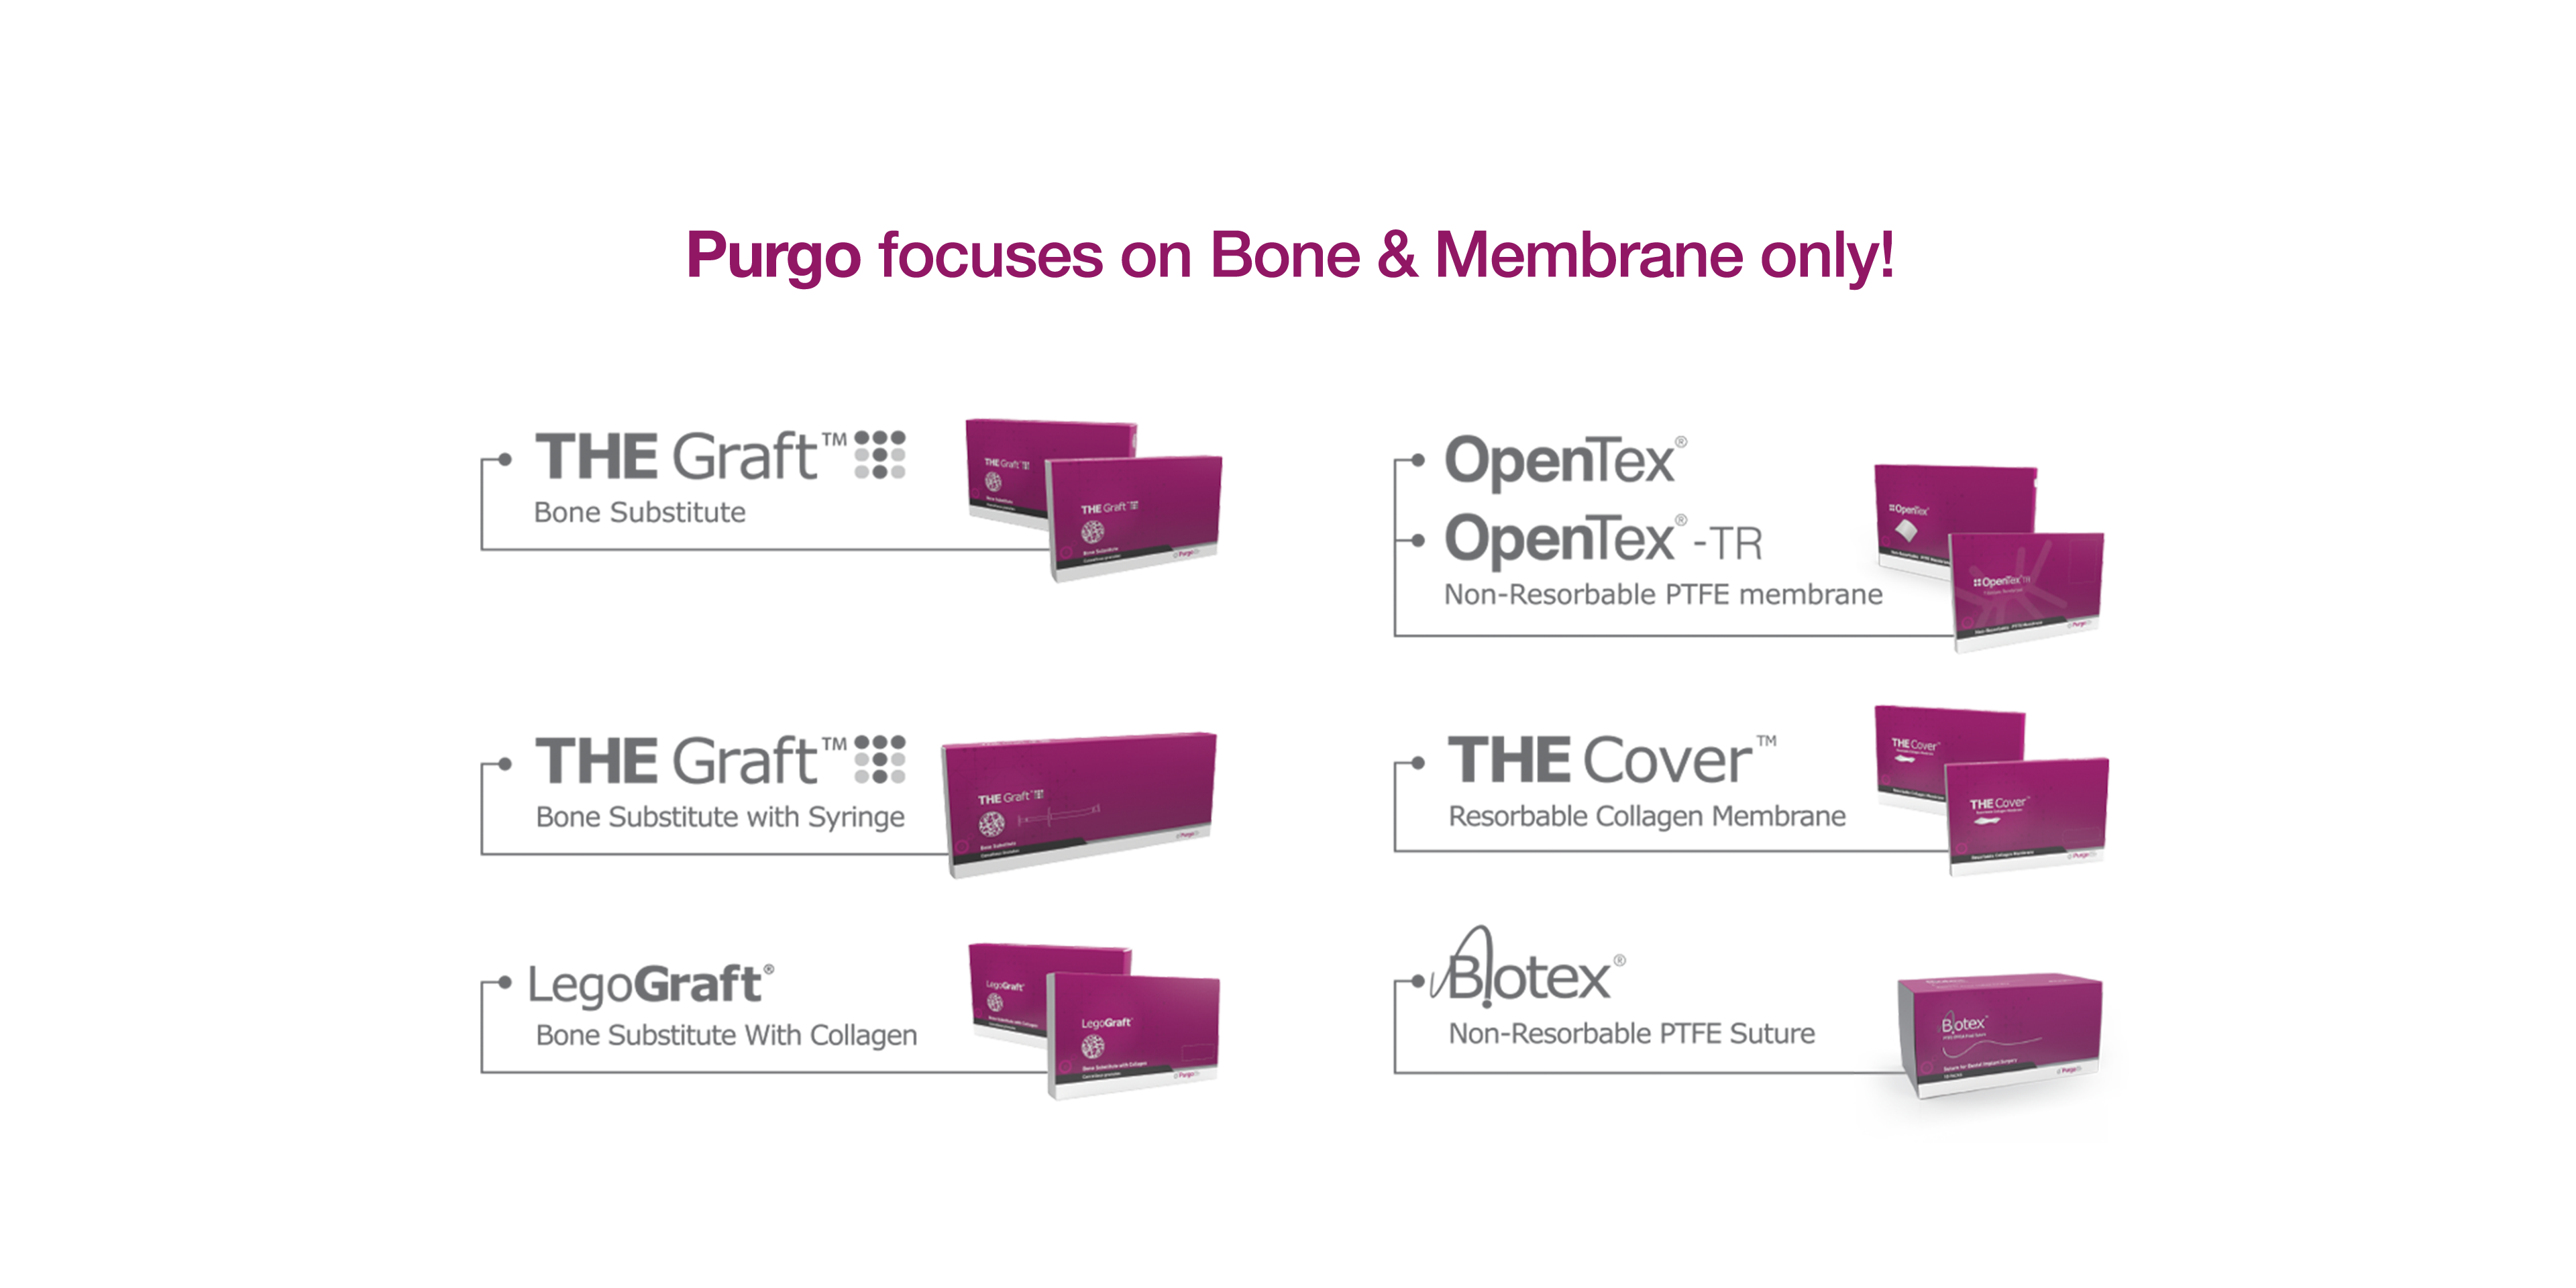 Purgo focuses on Bone & Membrane only!